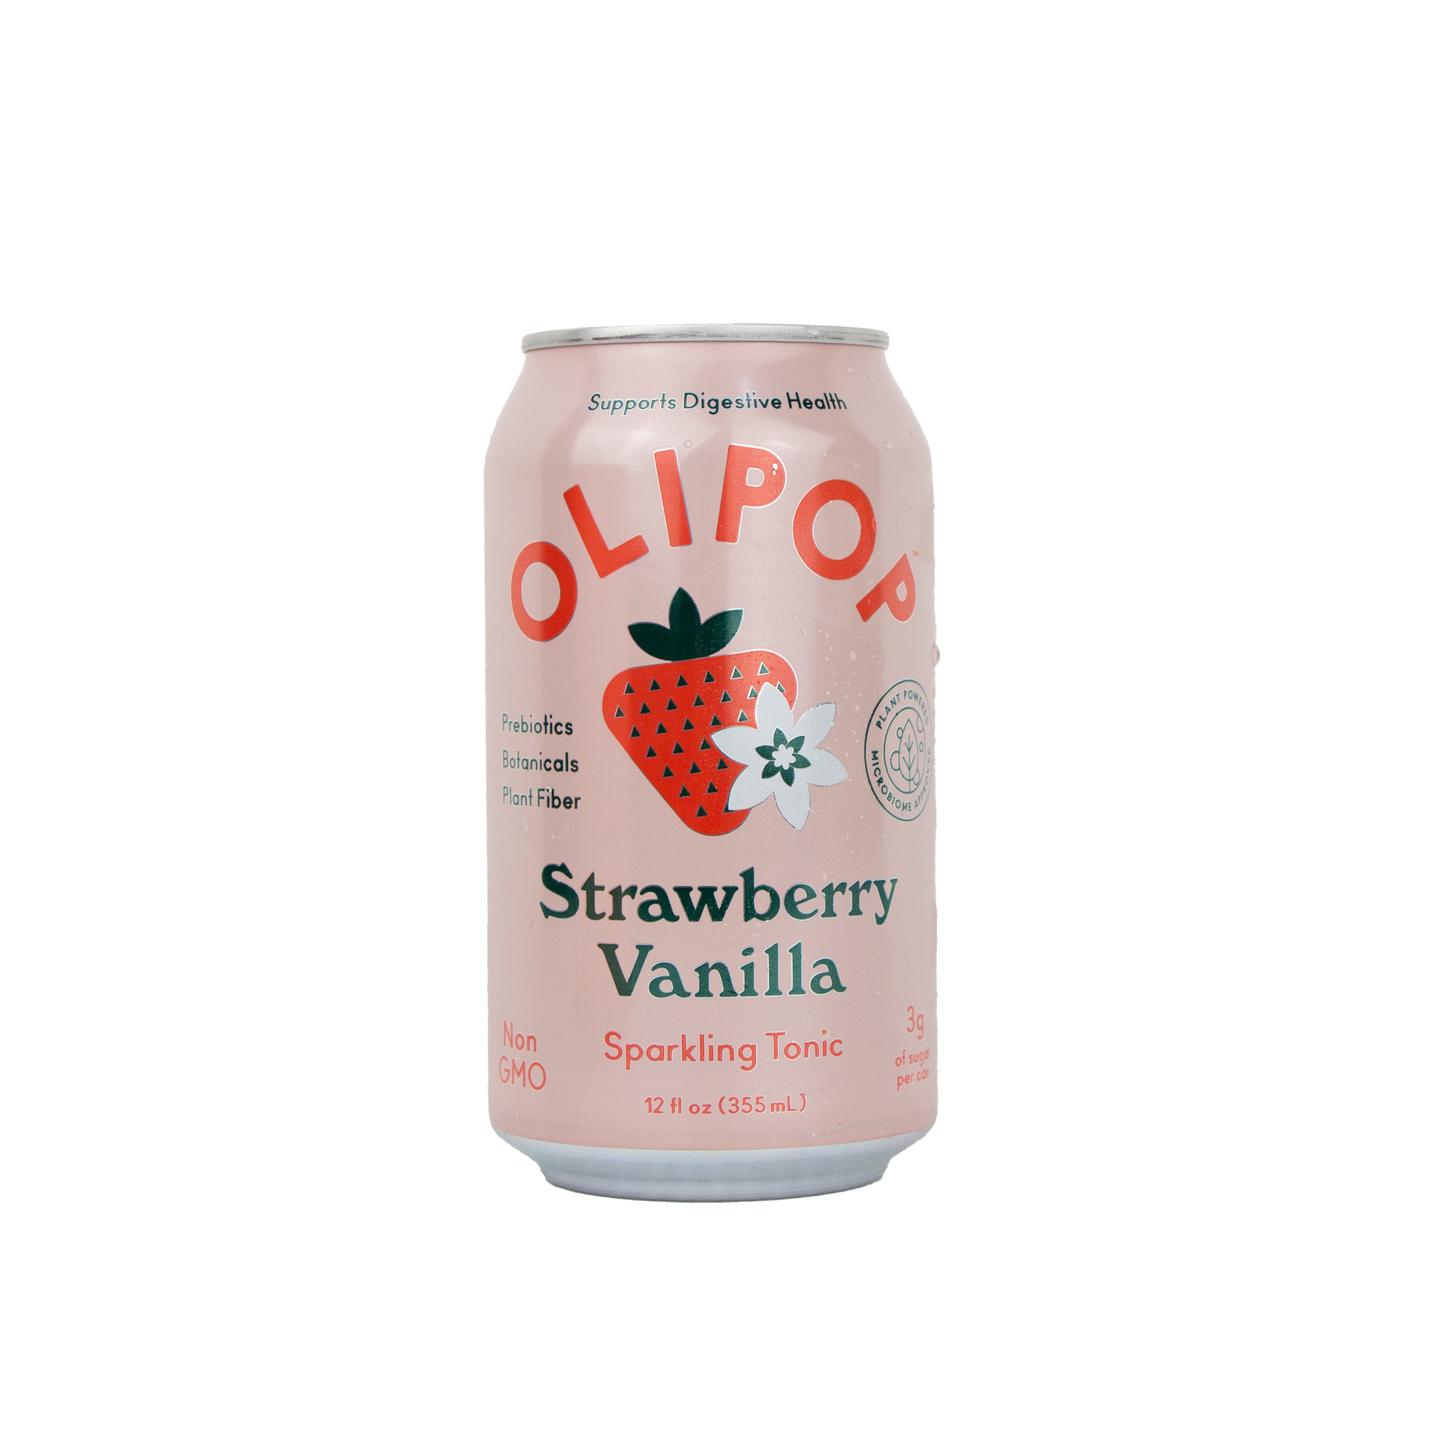 Olipop - Strawberry Vanilla